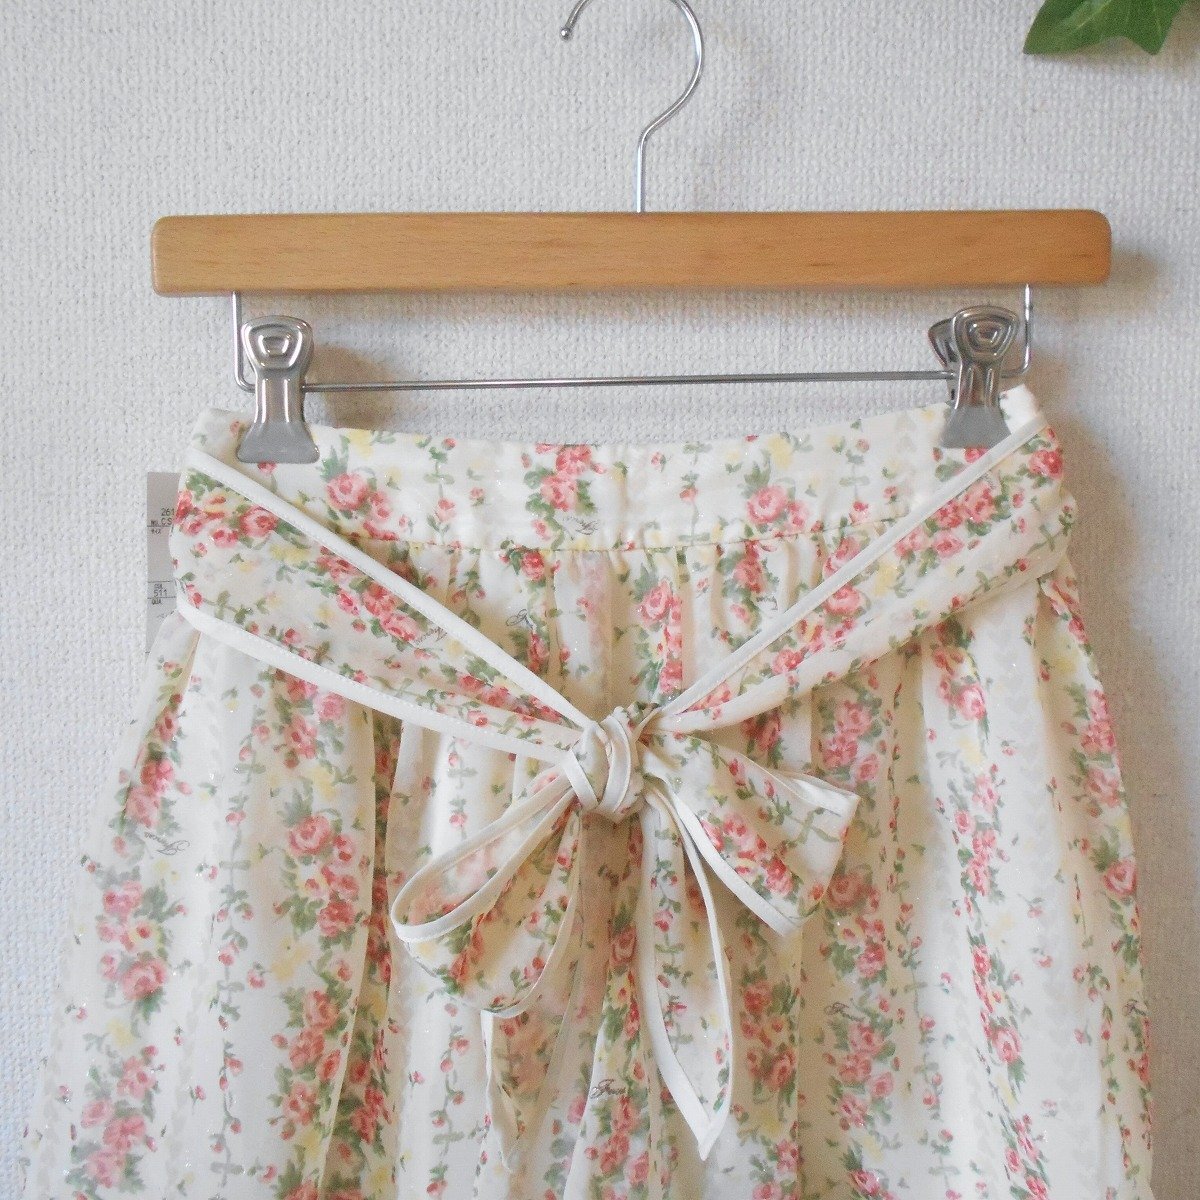  tag equipped Feroux Feroux culotte skirt 2 short pants sash belt attaching floral print unused 